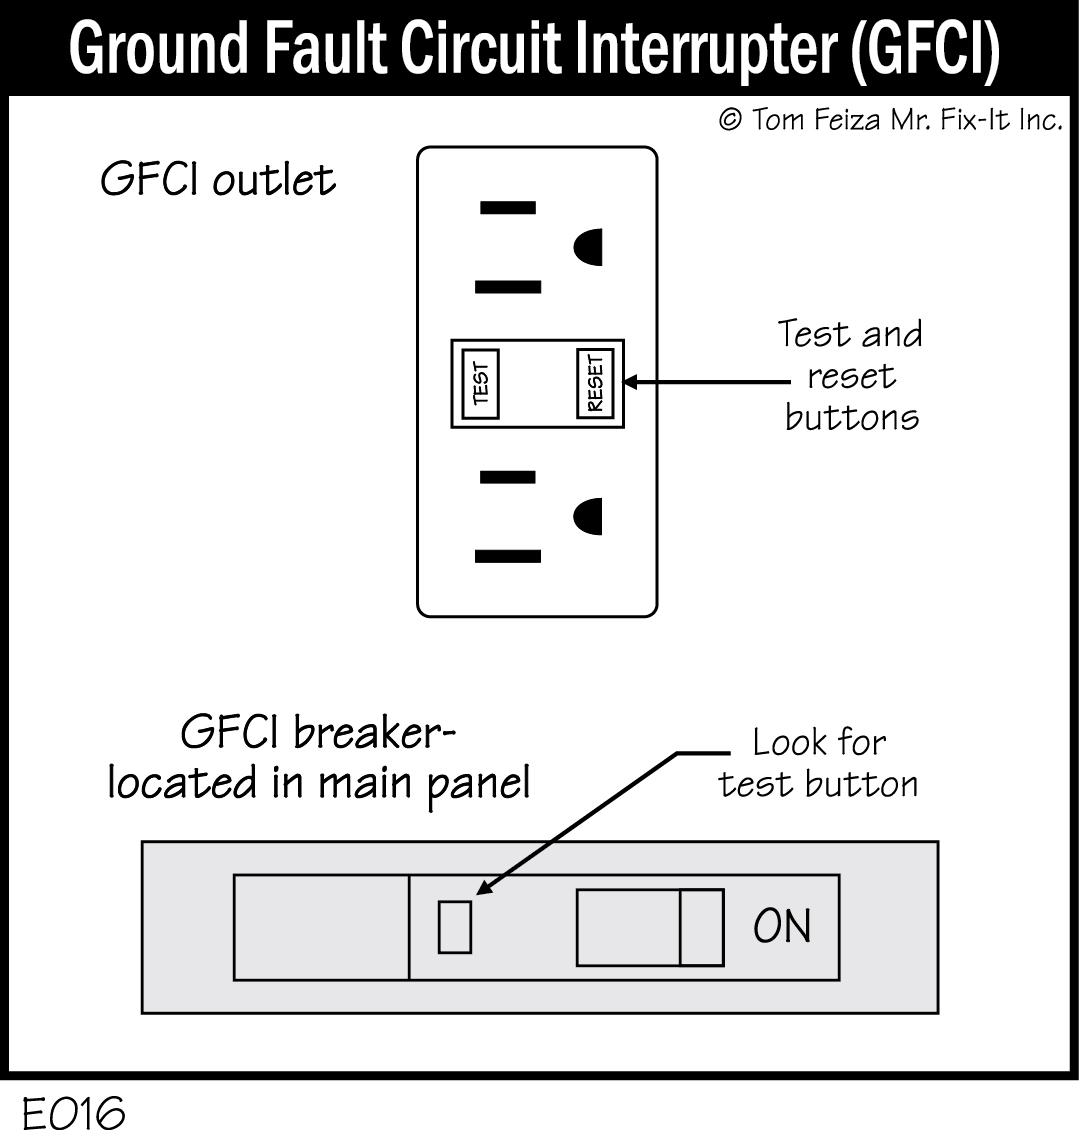 E016 - Ground Fault Circuit Interrupter (GFCI)